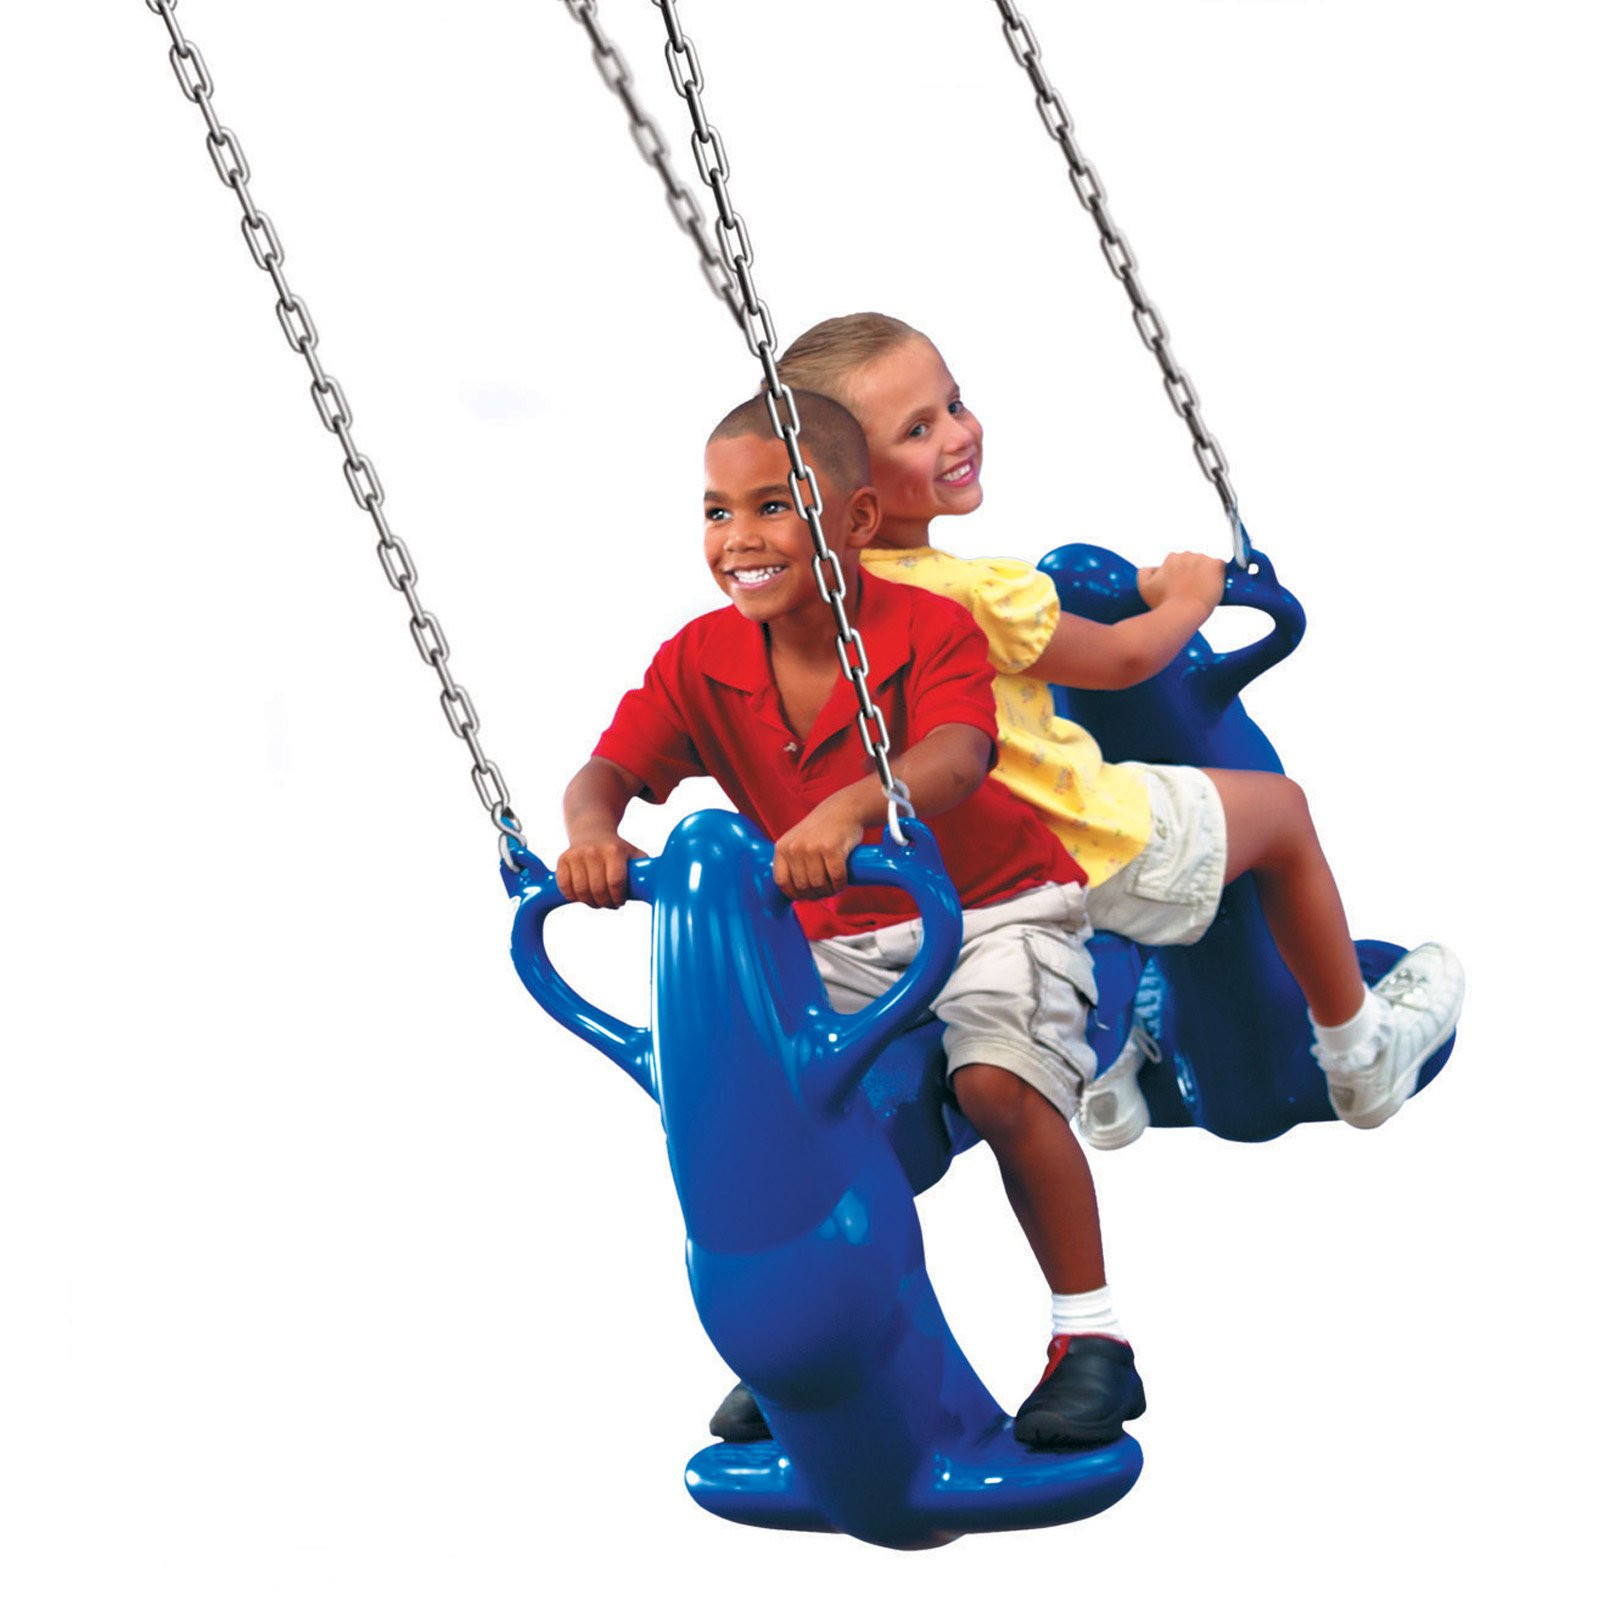 Cheap Kids Swing Sets
 Swing N Slide Mega Rider Multi Child Swing Swings at